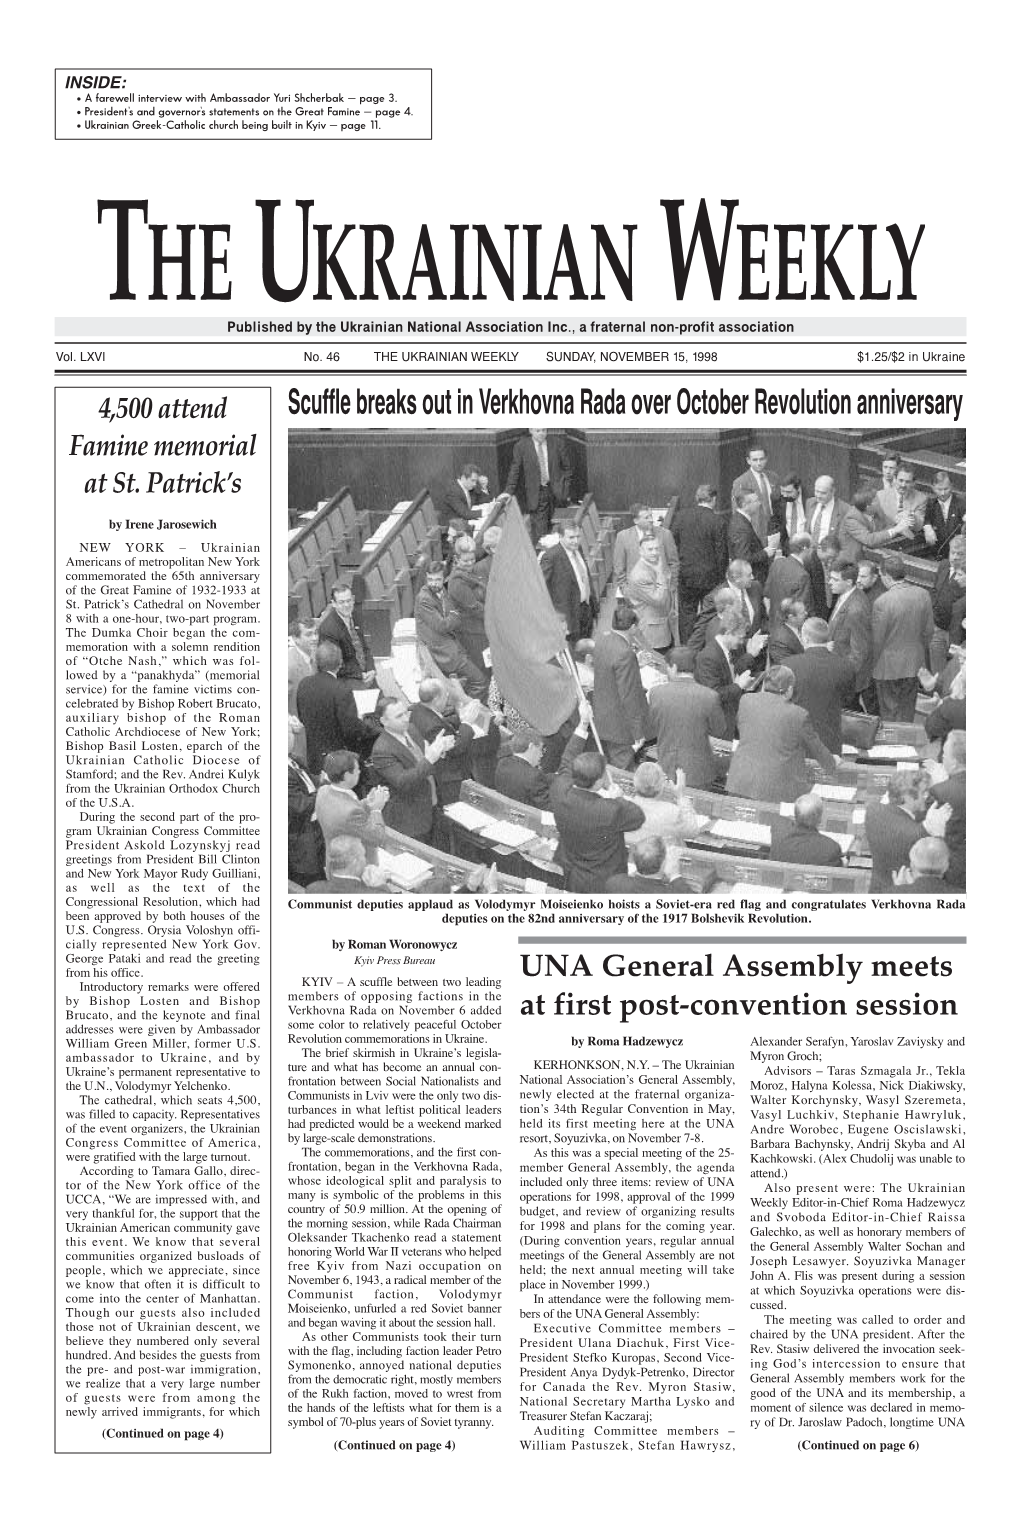 The Ukrainian Weekly 1998, No.46